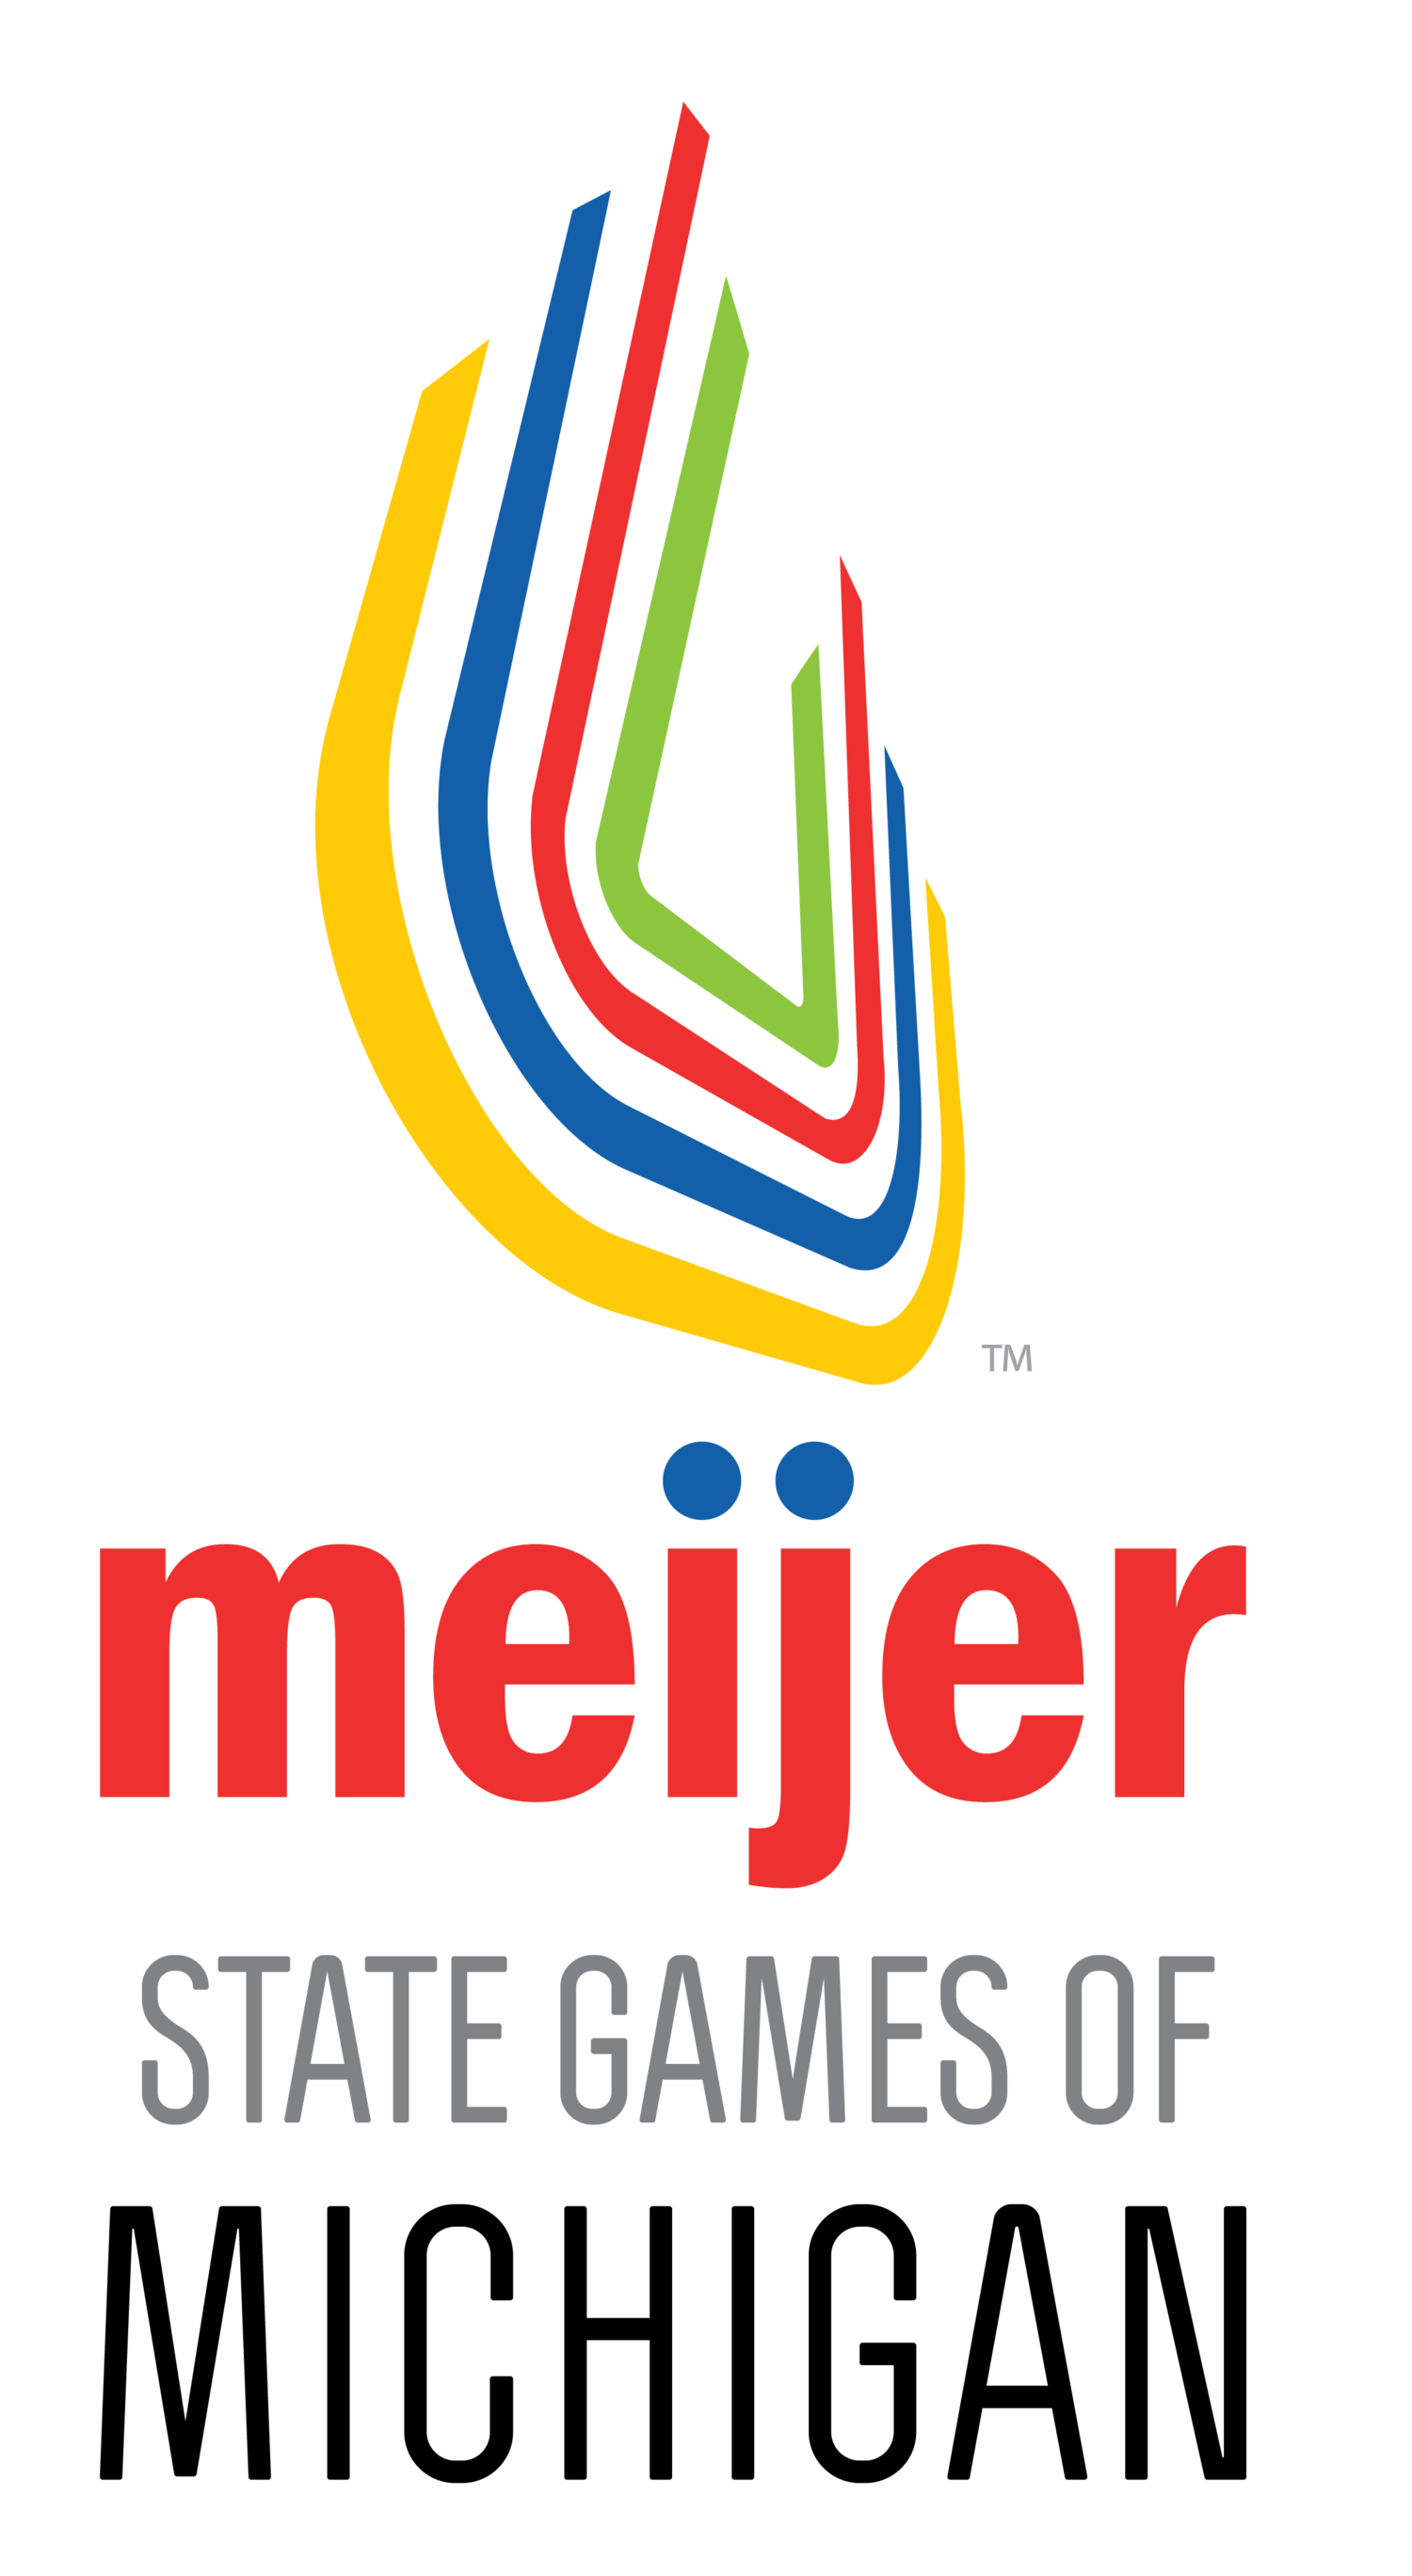 Meijer Brand Logo - Meijer State Games of Michigan